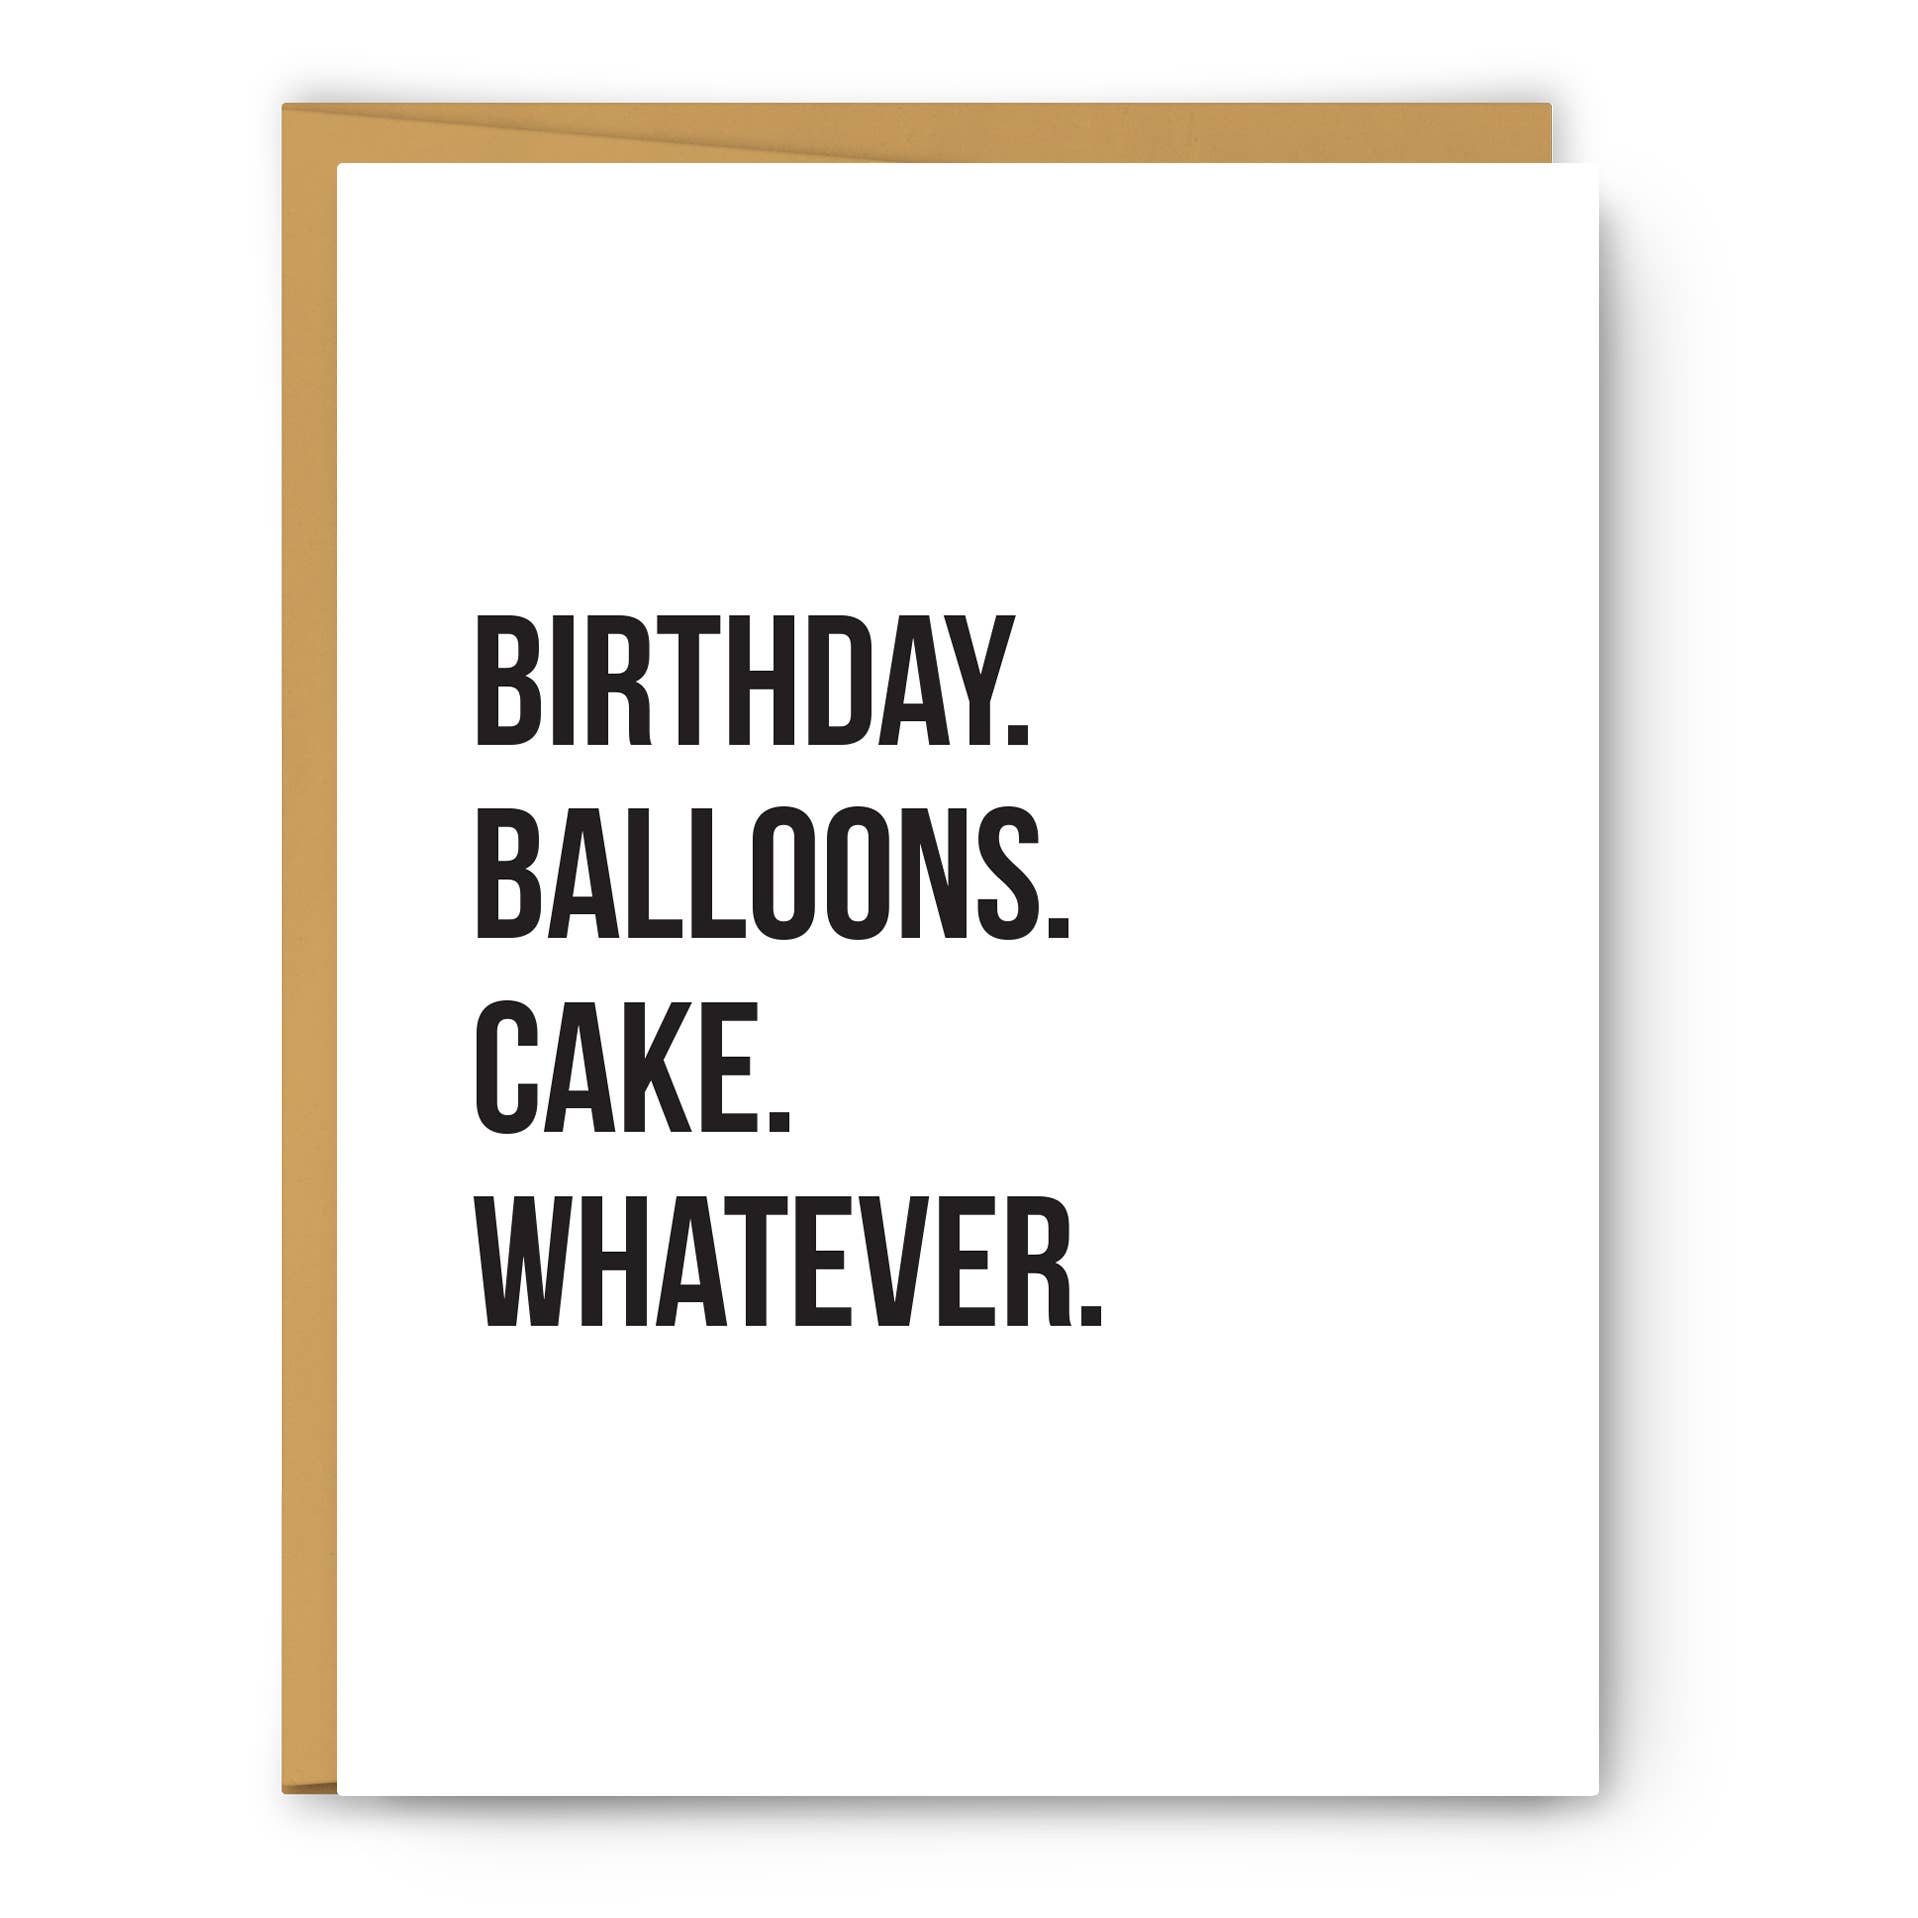 Birthday. Balloons. Cake. Whatever. Card